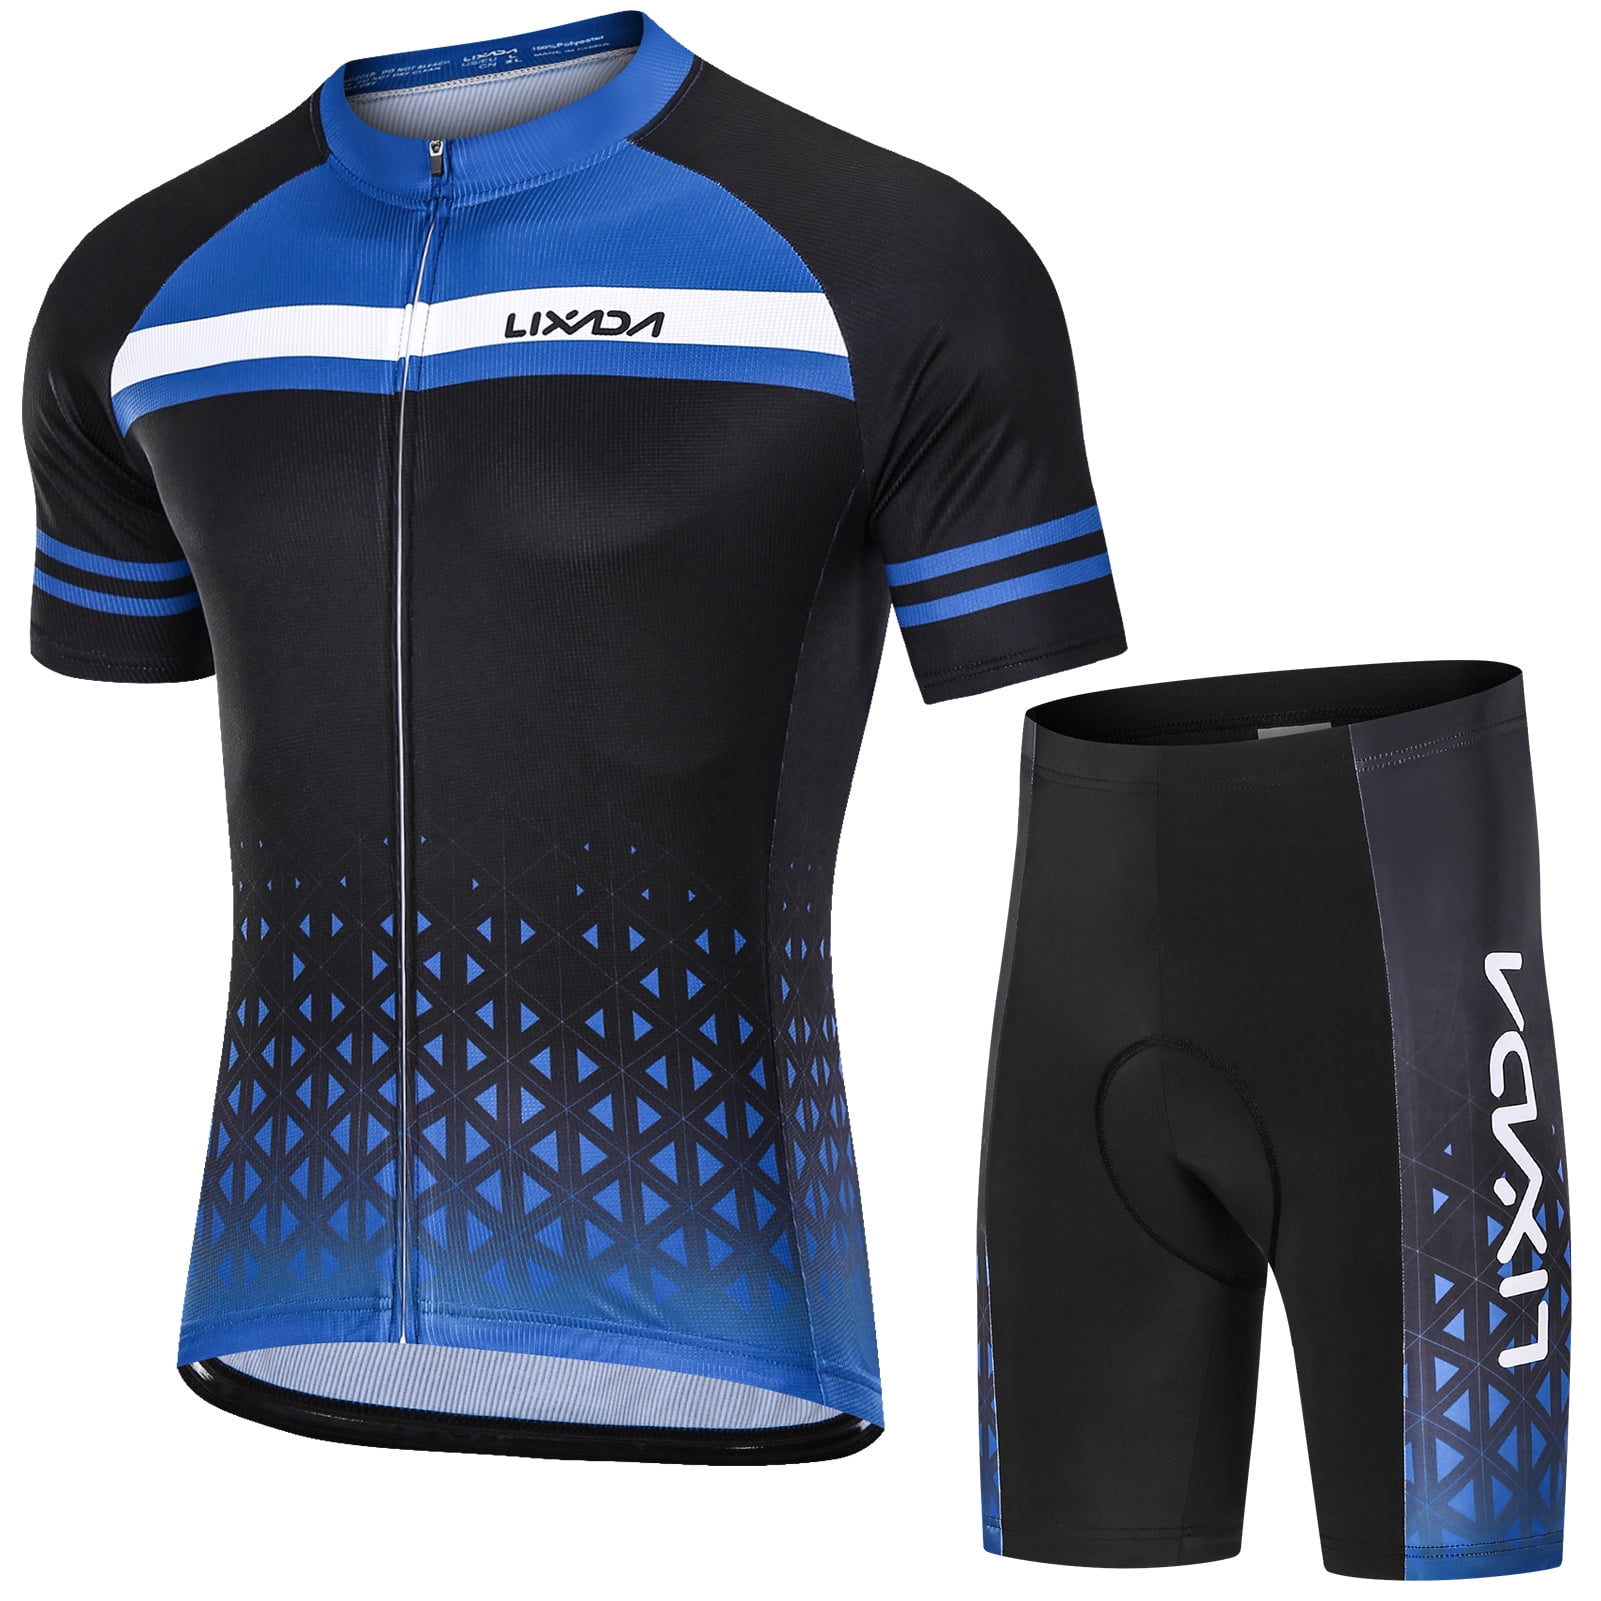 Details about   Camping Jersey Cycling Short Sleevs Full Zipper Men Cycling Bike Wear 